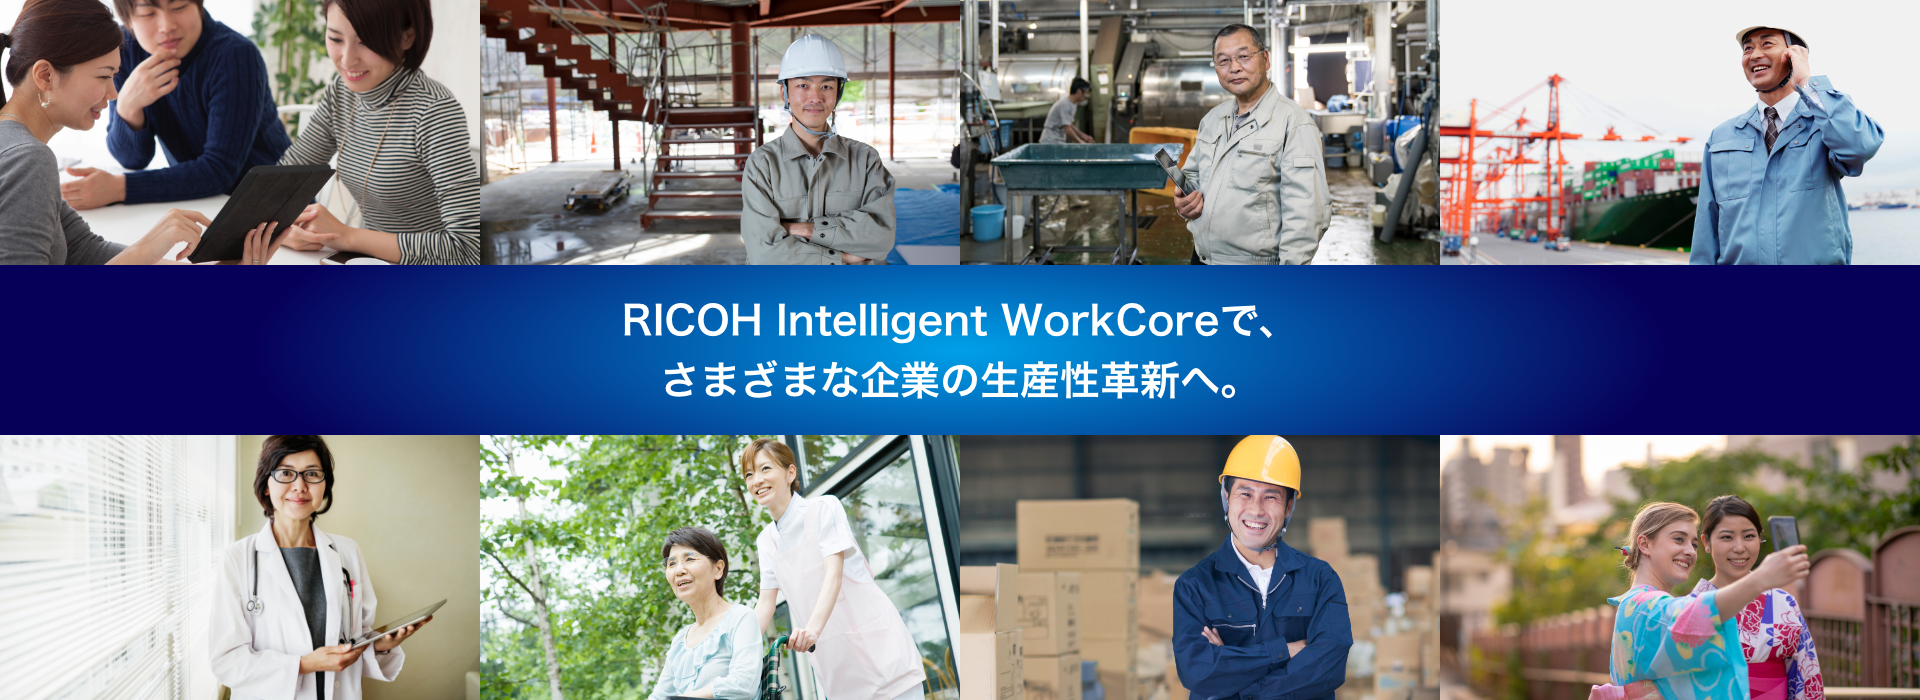 RICOH Intelligent WorkCoreで、さまざまな企業の生産性革新へ。